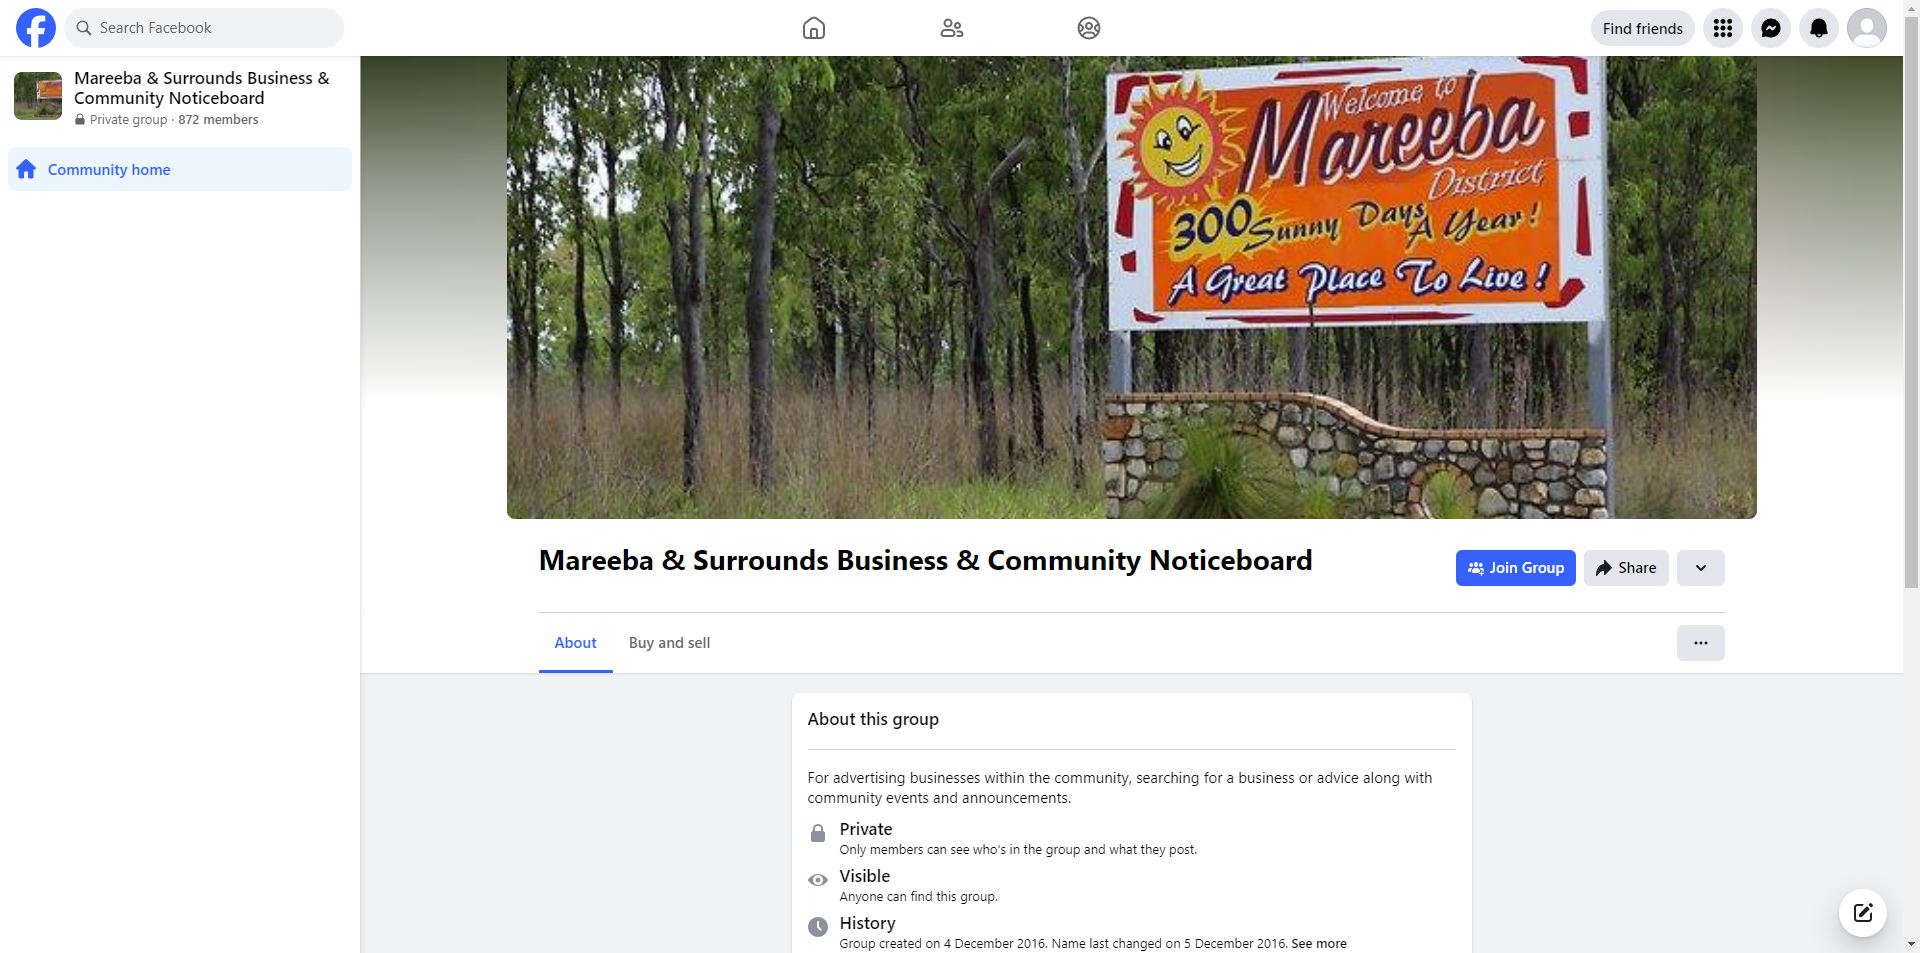 Mareeba & Surrounds Business & Community Noticeboard